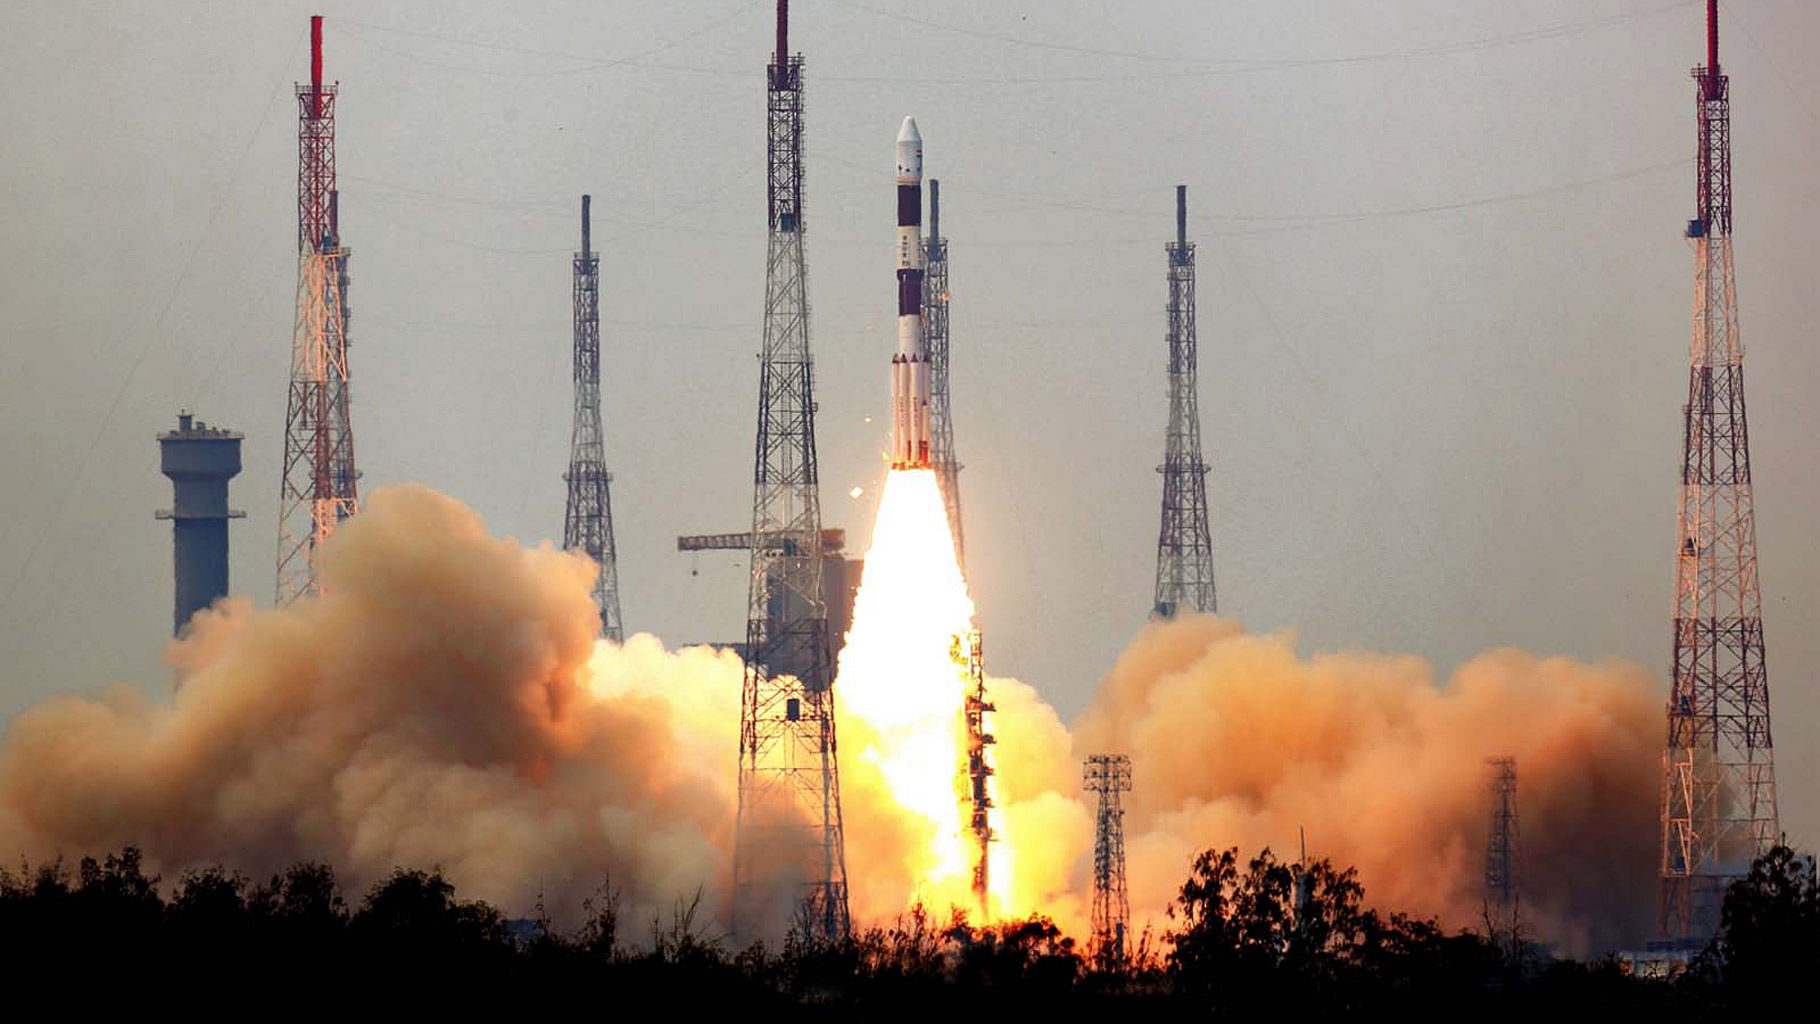  ISRO satellite launch. Image used for representational purposes. (Photo Courtesy: ISRO)